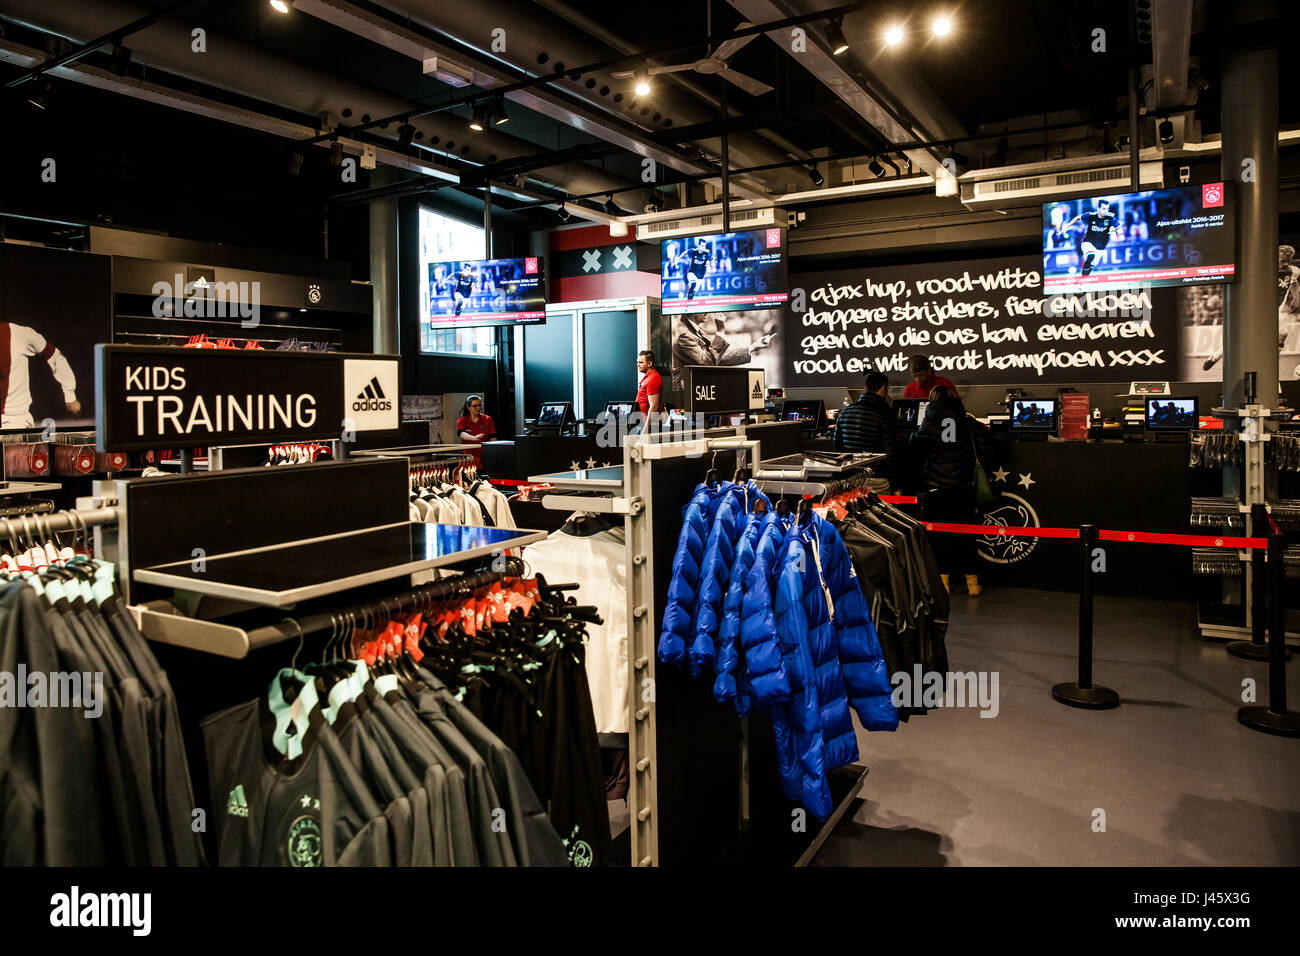 Ajax fotball club shop interior on Amsterdam Arena, Netherlands Stock Photo  - Alamy